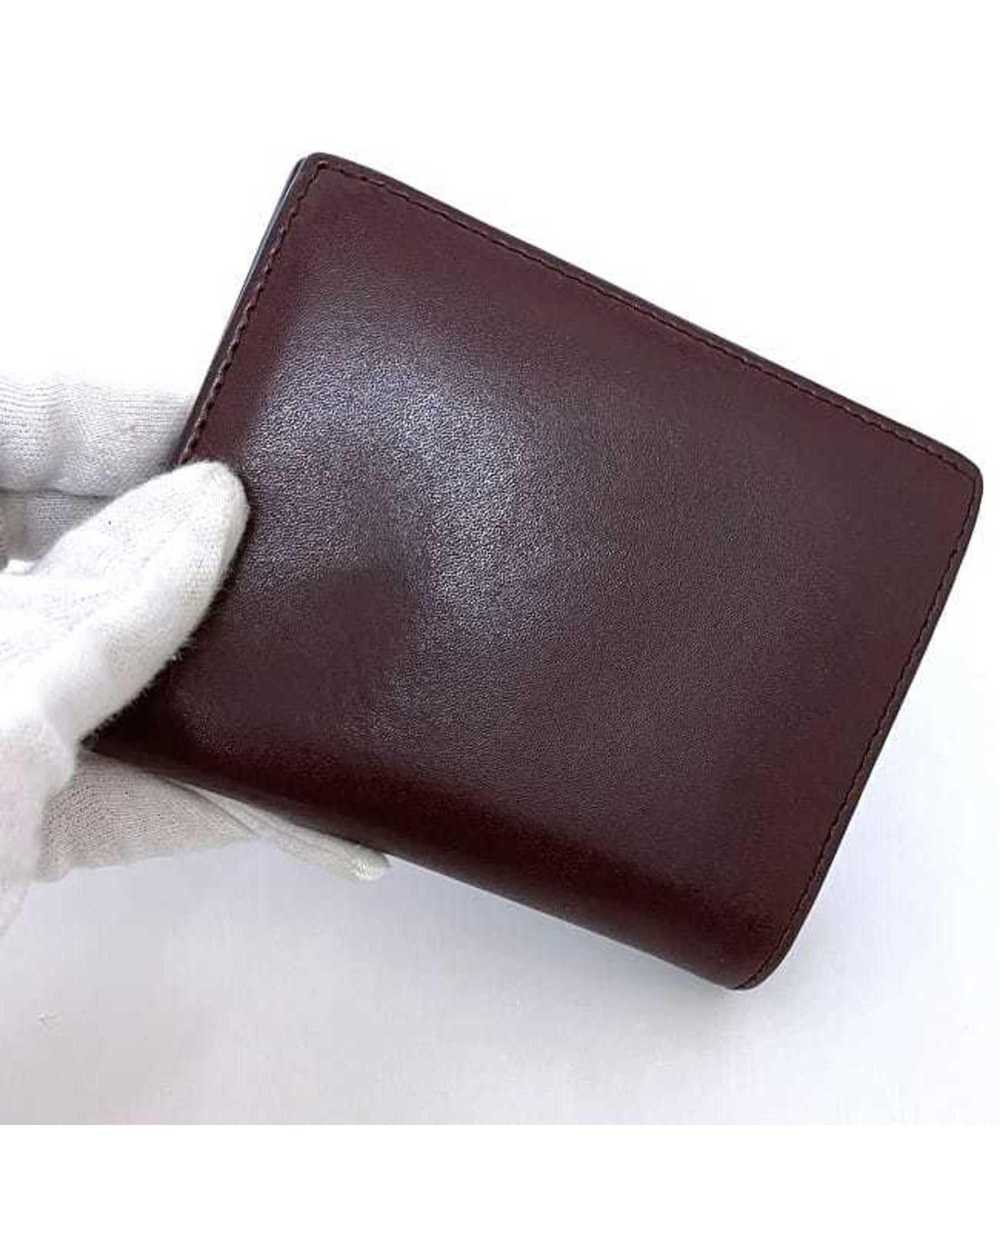 Fendi Burgundy Leather Compact Wallet - image 4